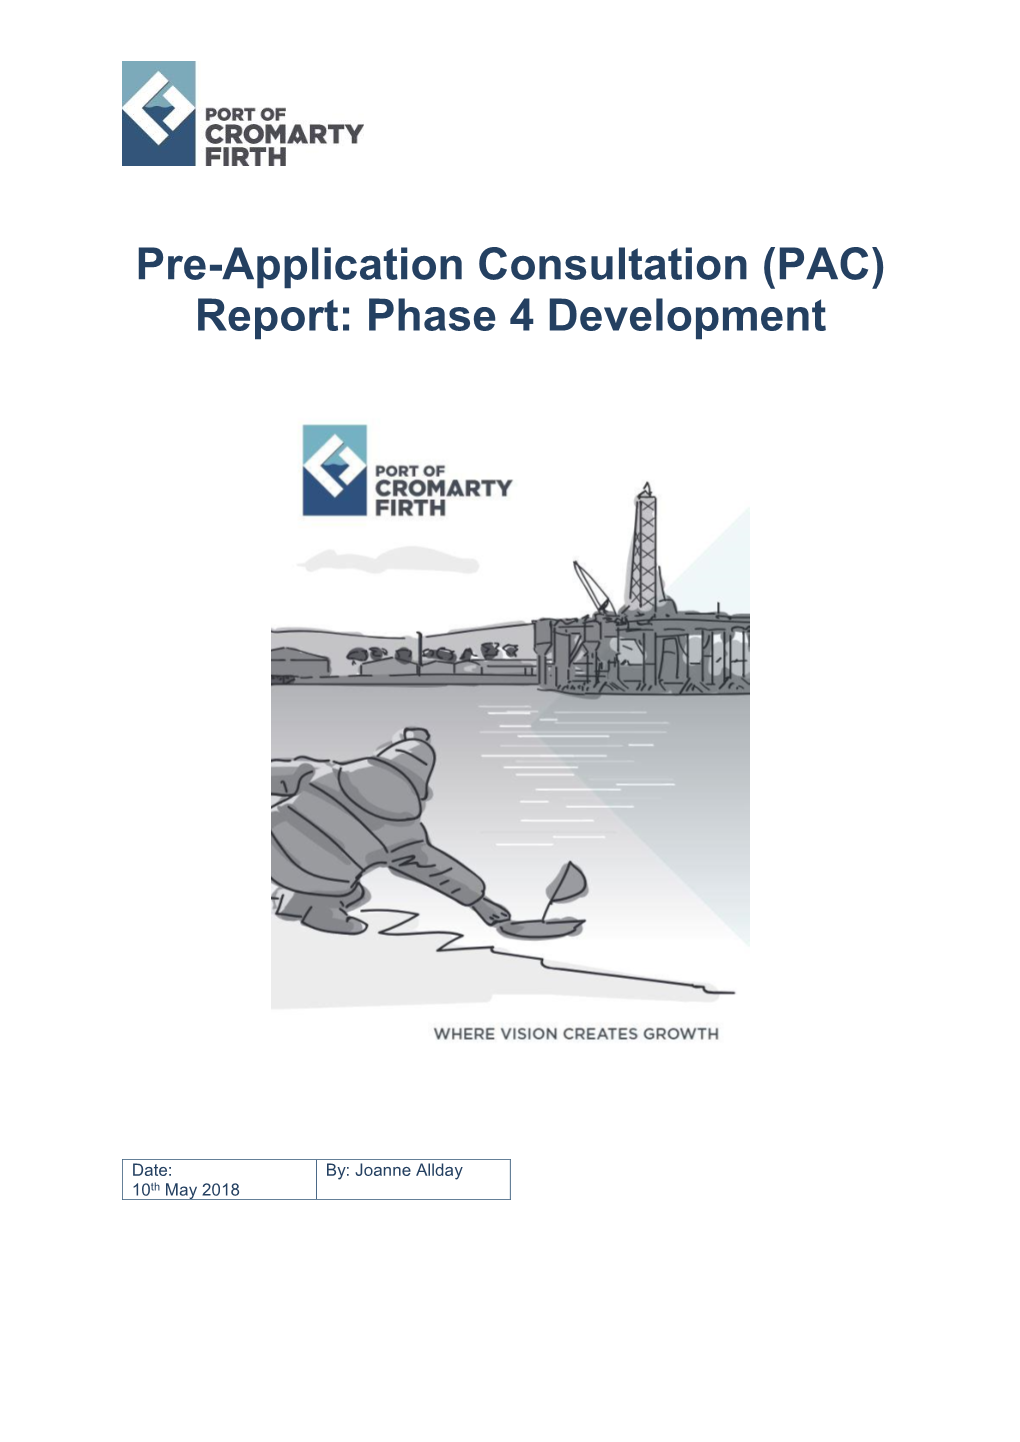 Pre-Application Consultation (PAC) Report: Phase 4 Development